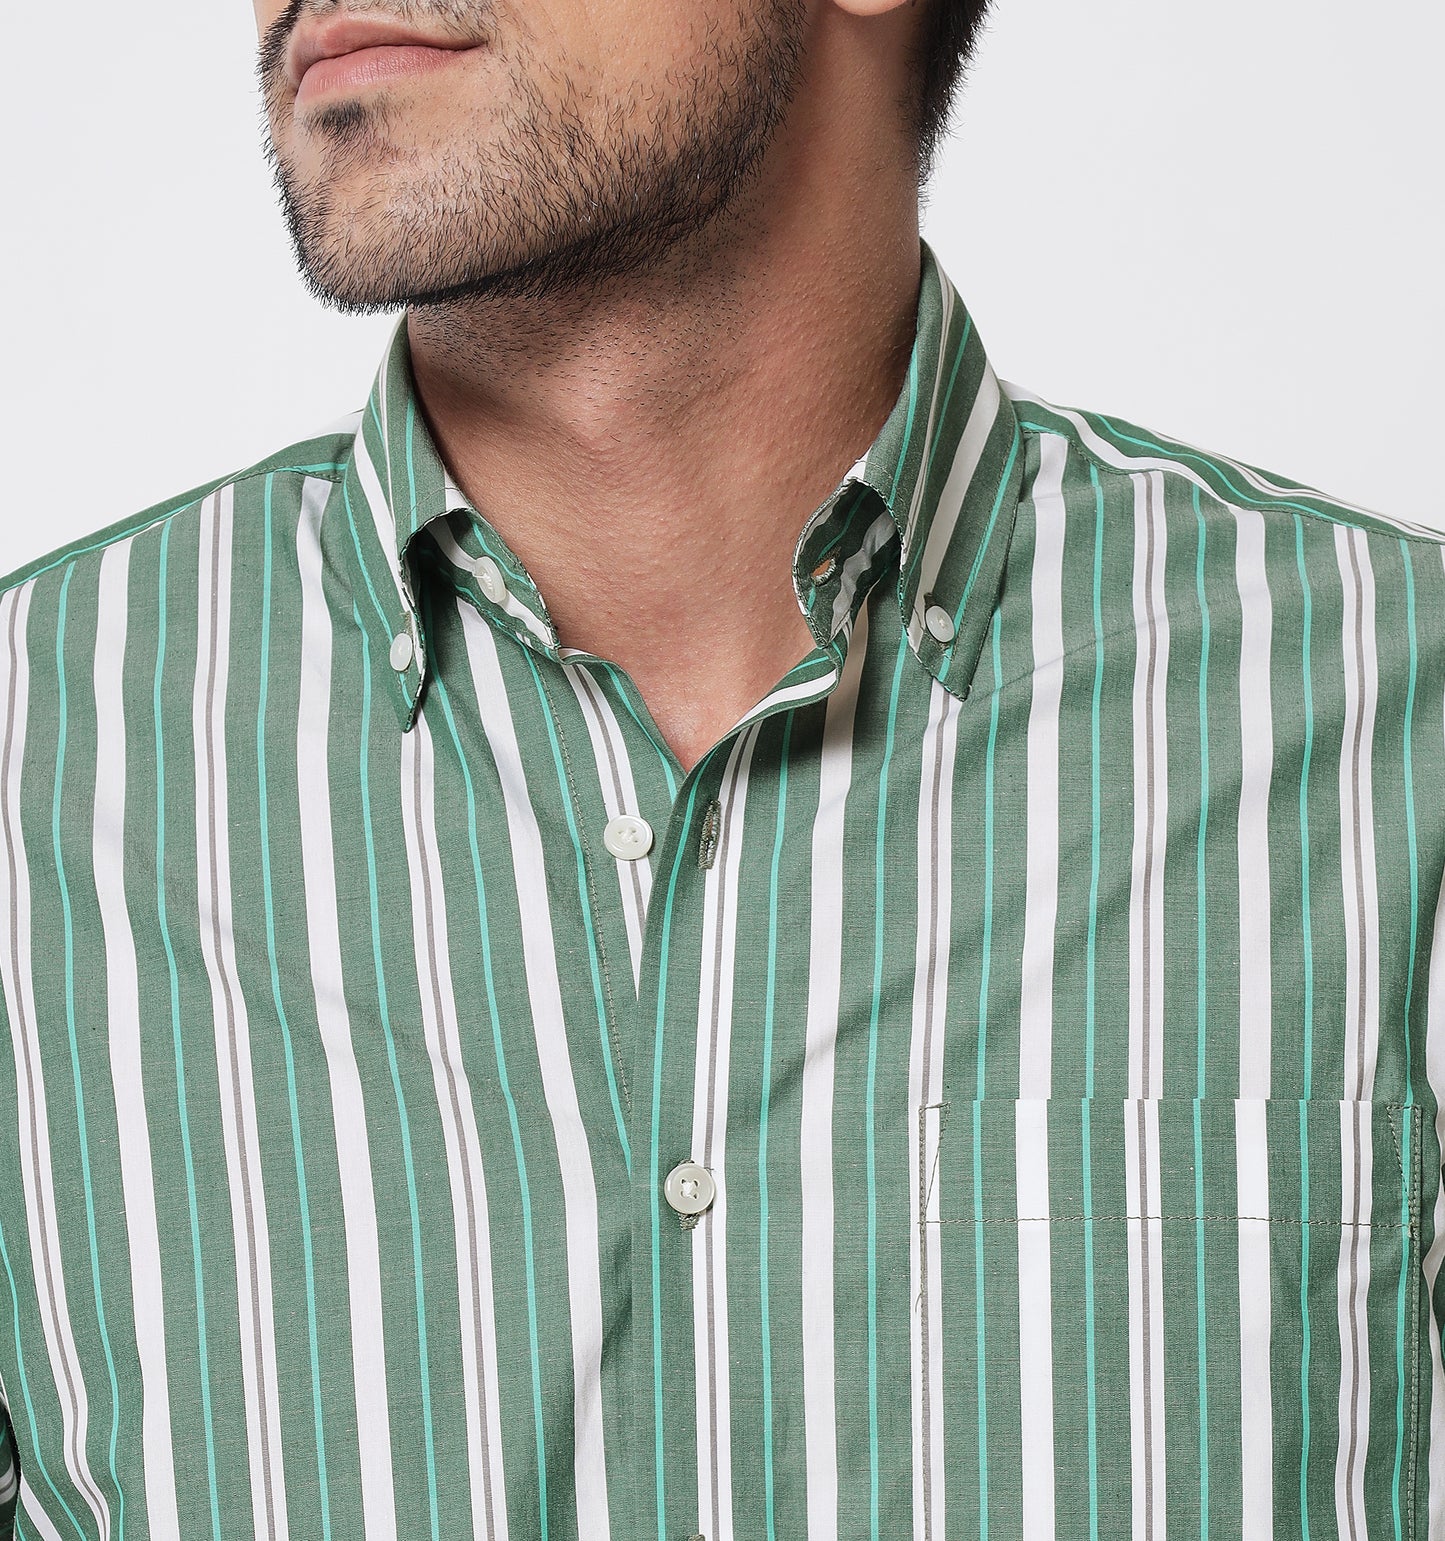 Jalapeno Stripes Shirt